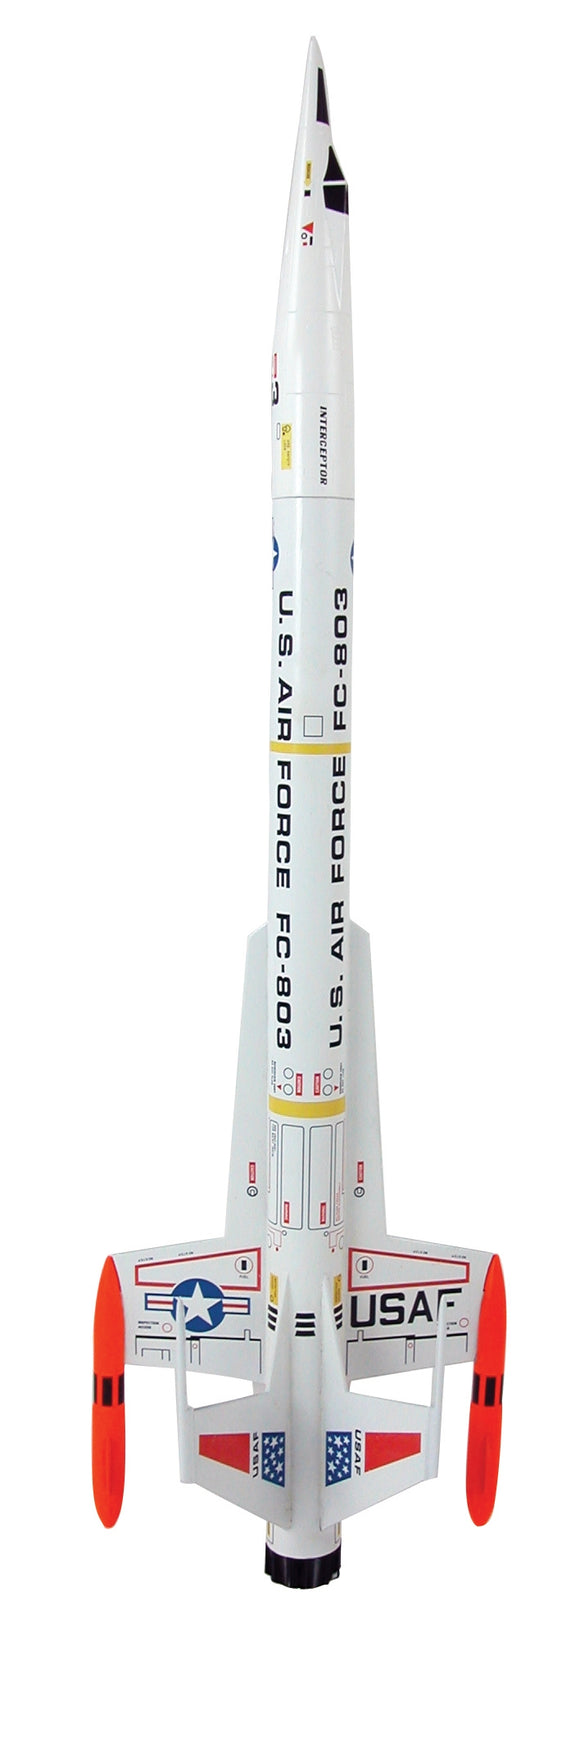 Interceptor Model Rocket Kit, Skill Level 2 - Race Dawg RC